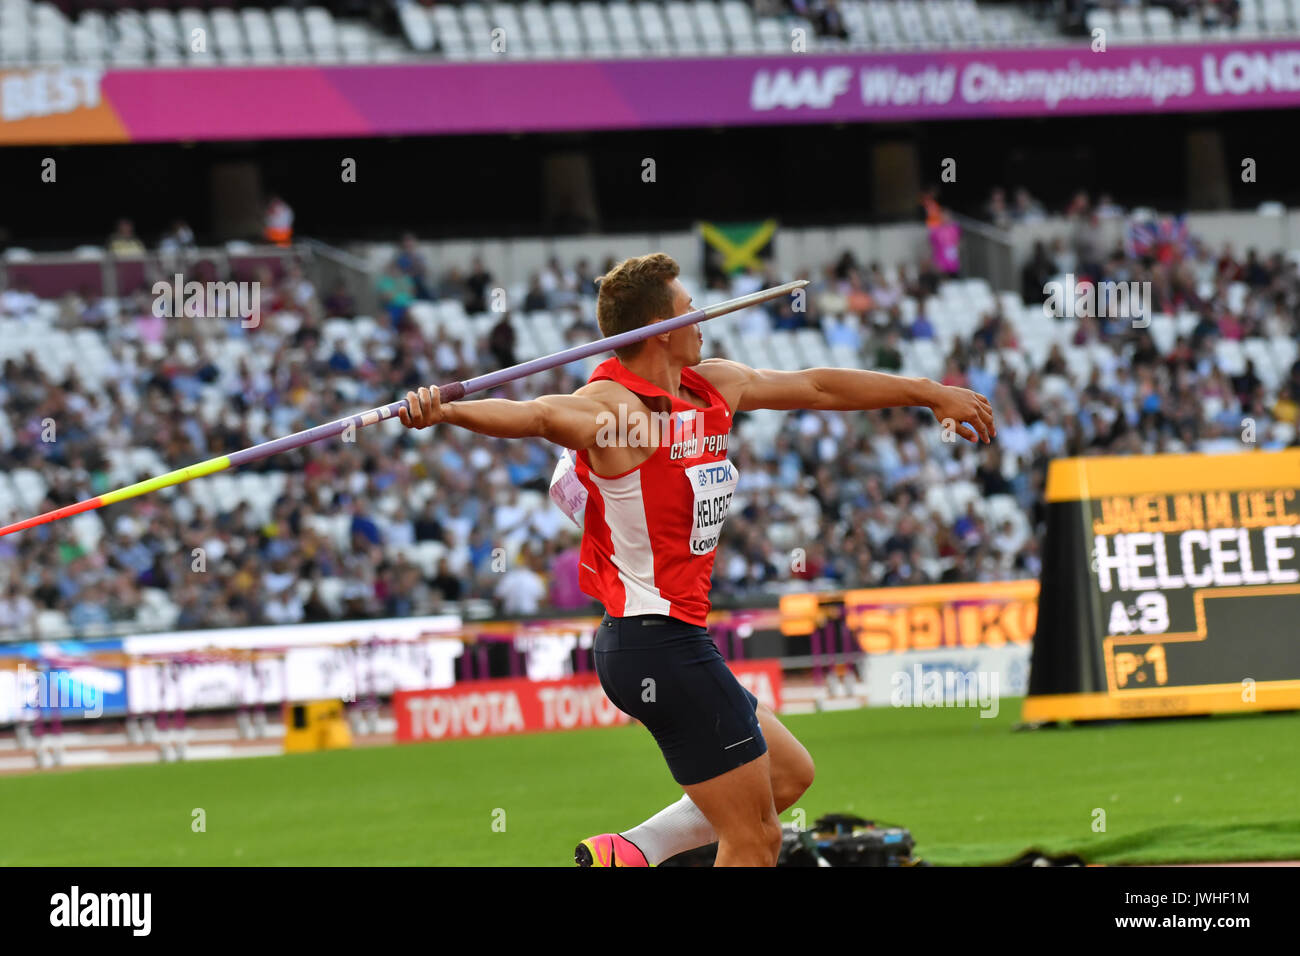 Queen Elizabeth Park, London, UK. 12th August 2017. IAAF World Championships. Day 9. Men's Decathlon, Javelin Throw, Adam Helcelet (CZE) Stock Photo